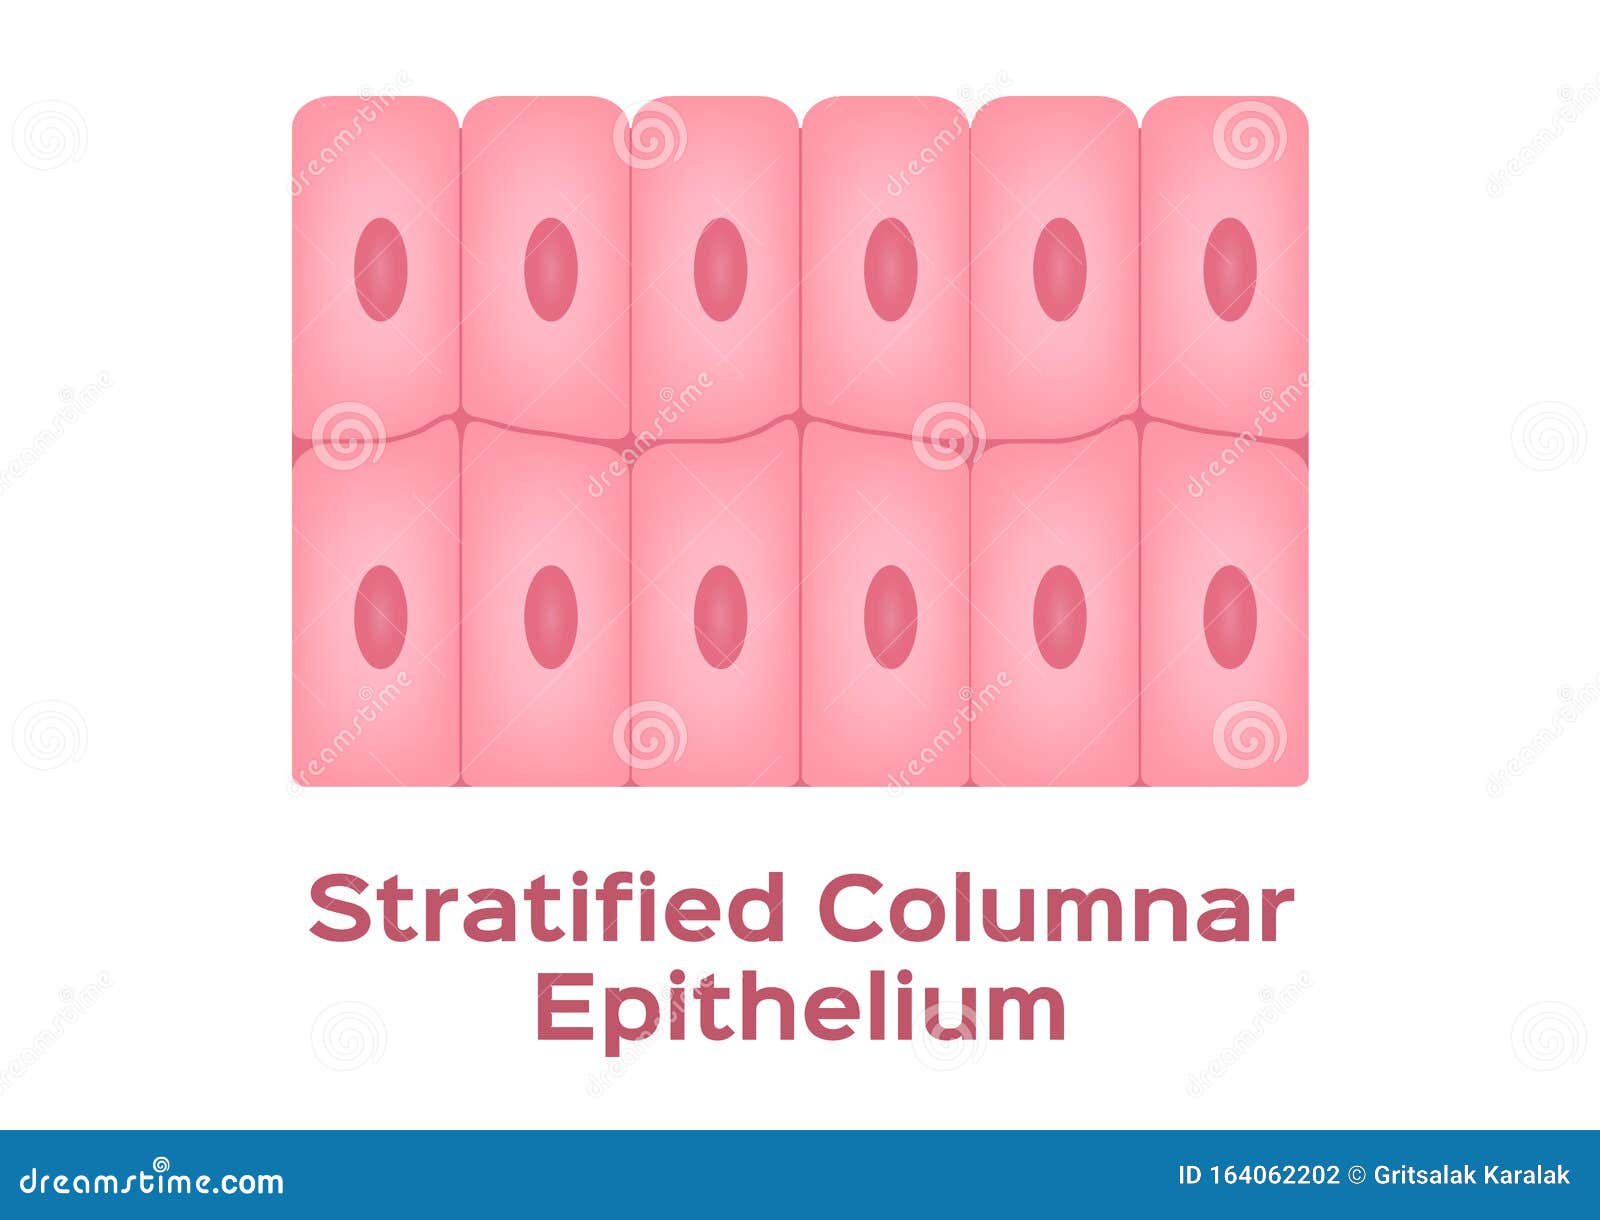 stratified columnar epithelium / epithelial tissue